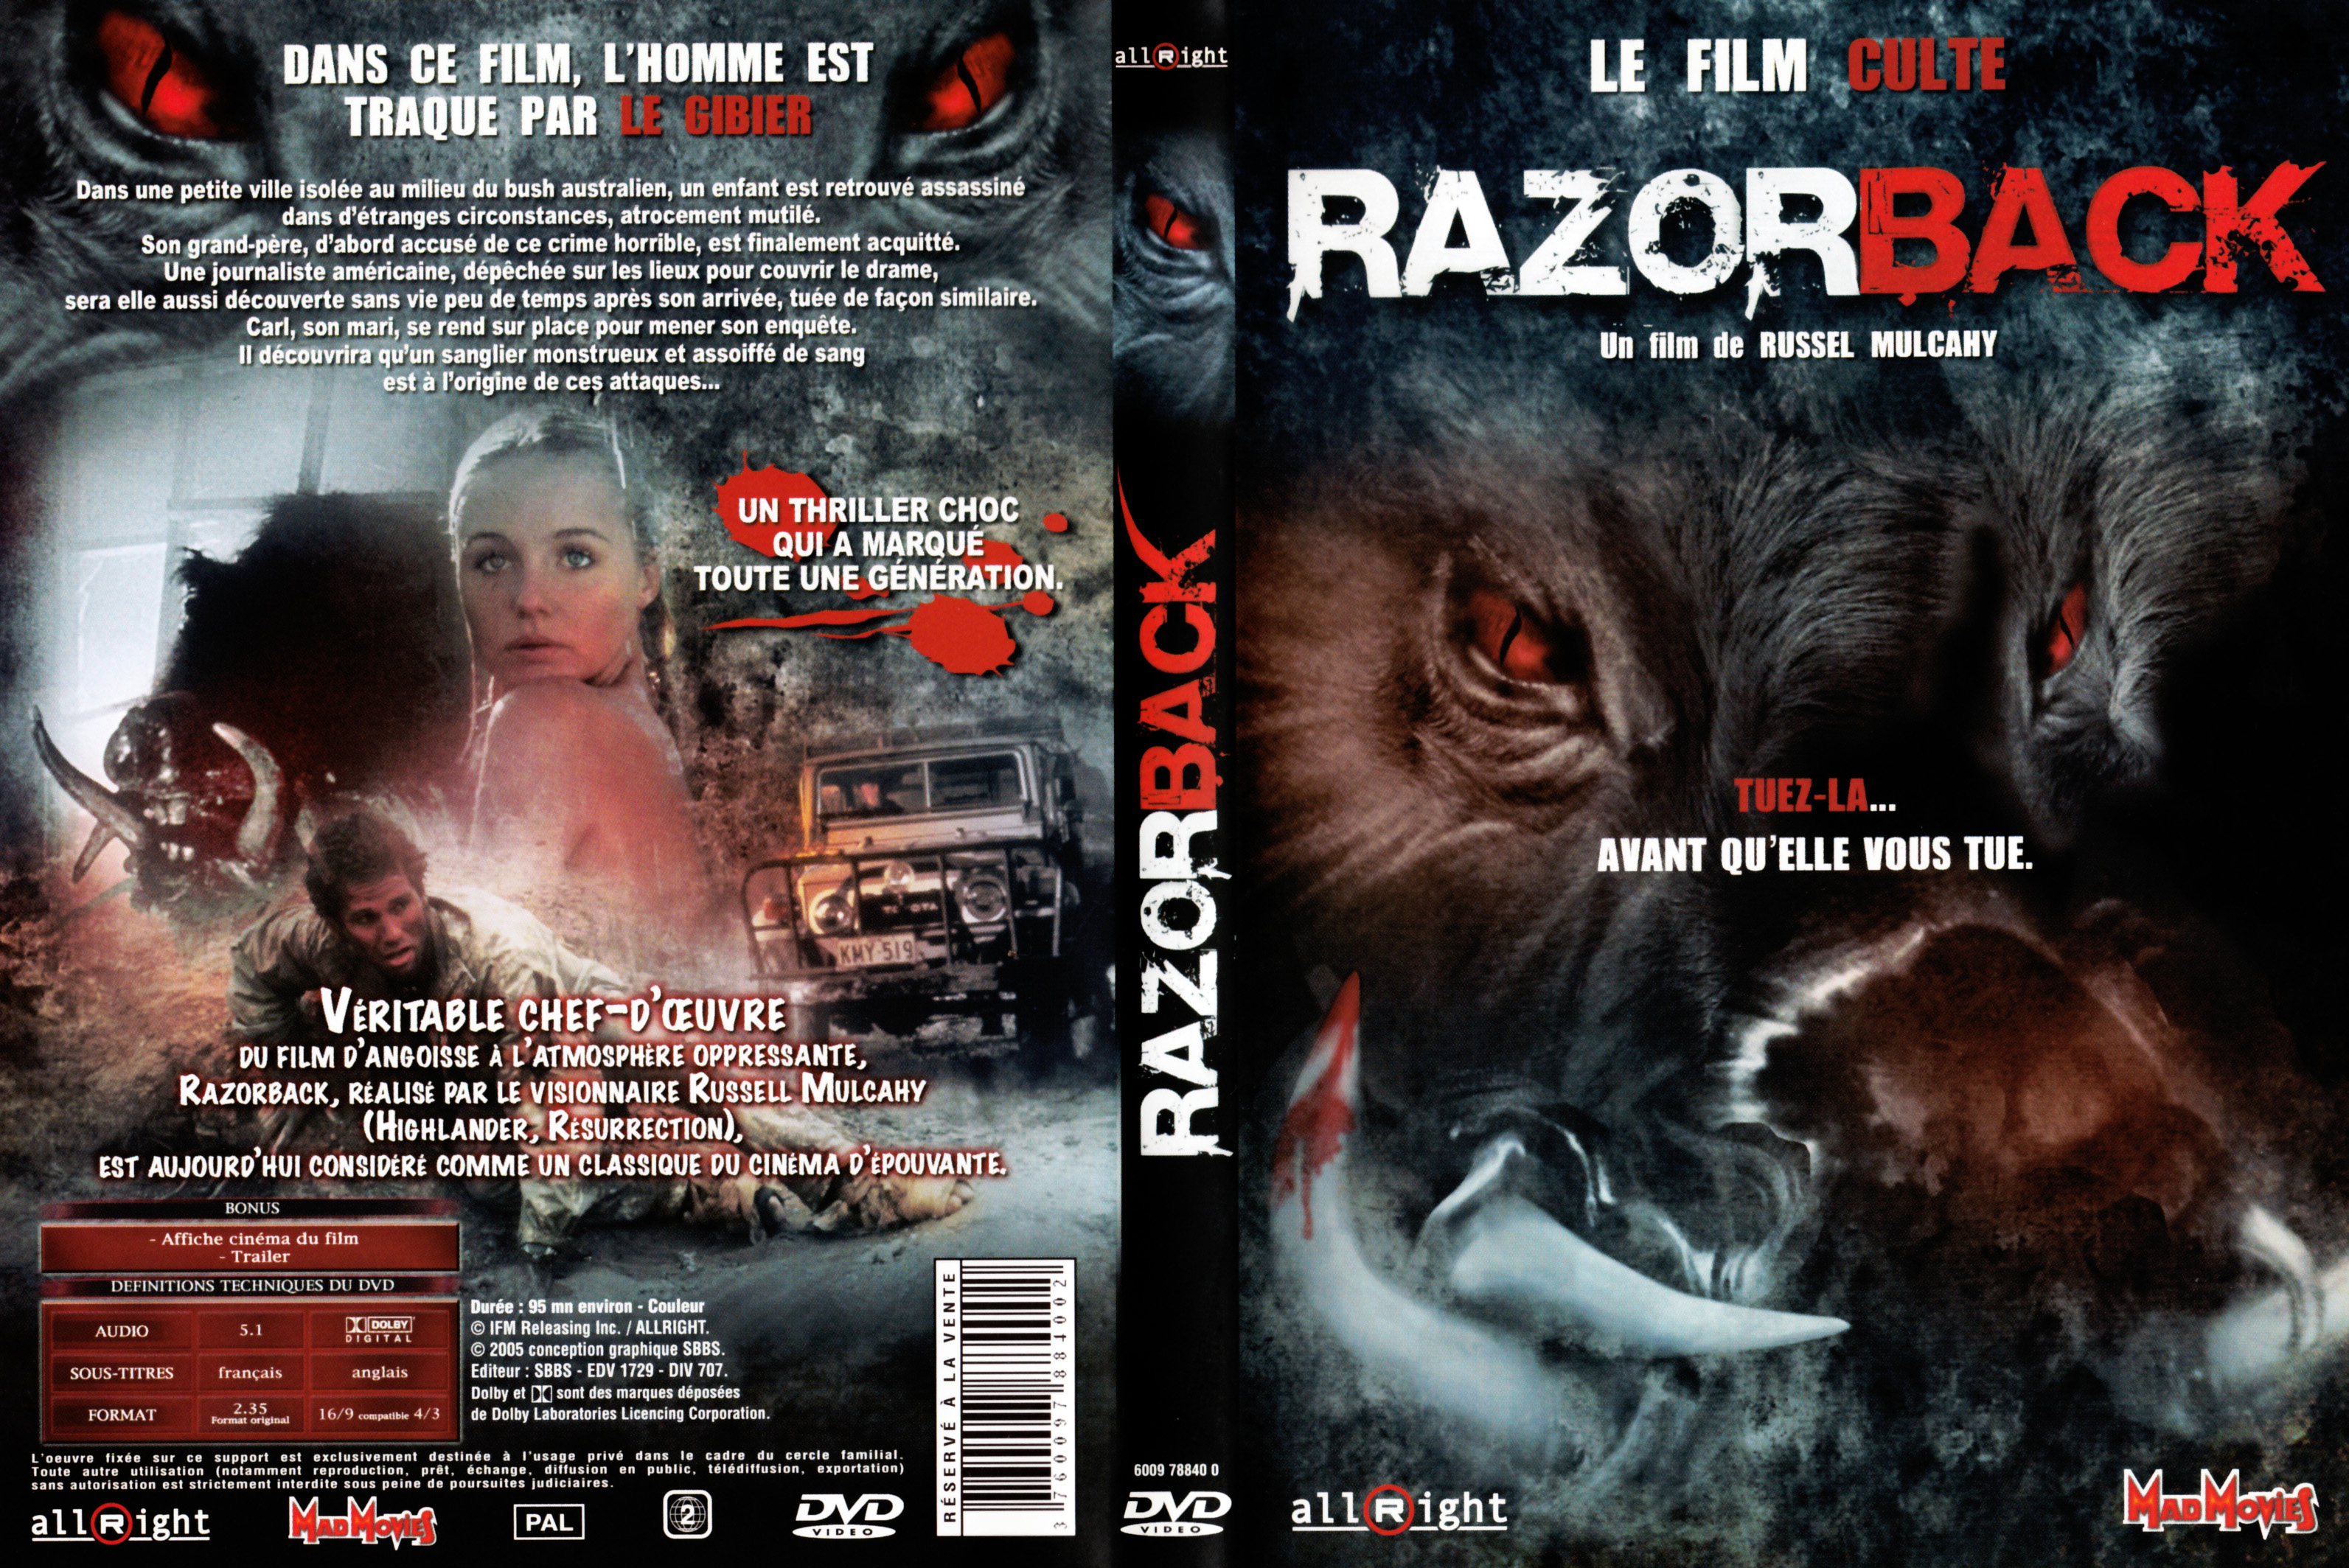 Jaquette DVD Razorback v2